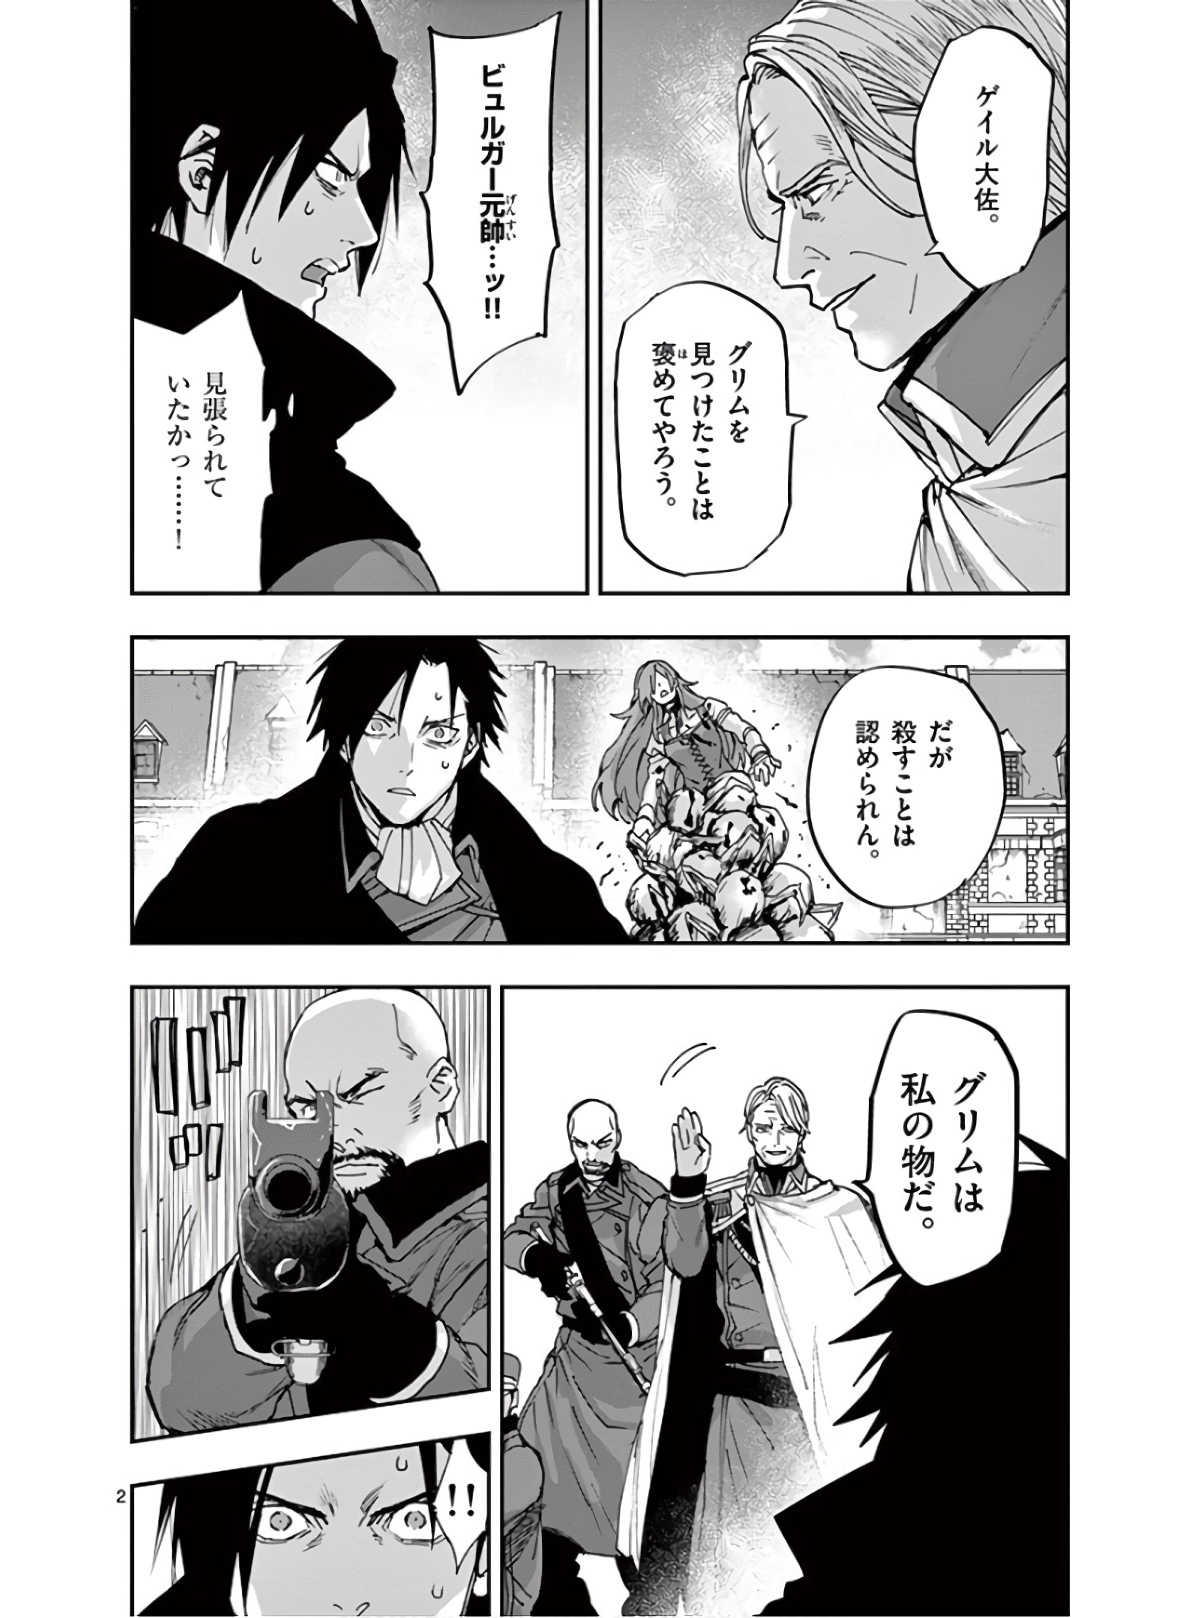 Ginrou Bloodborne - Chapter 110 - Page 2